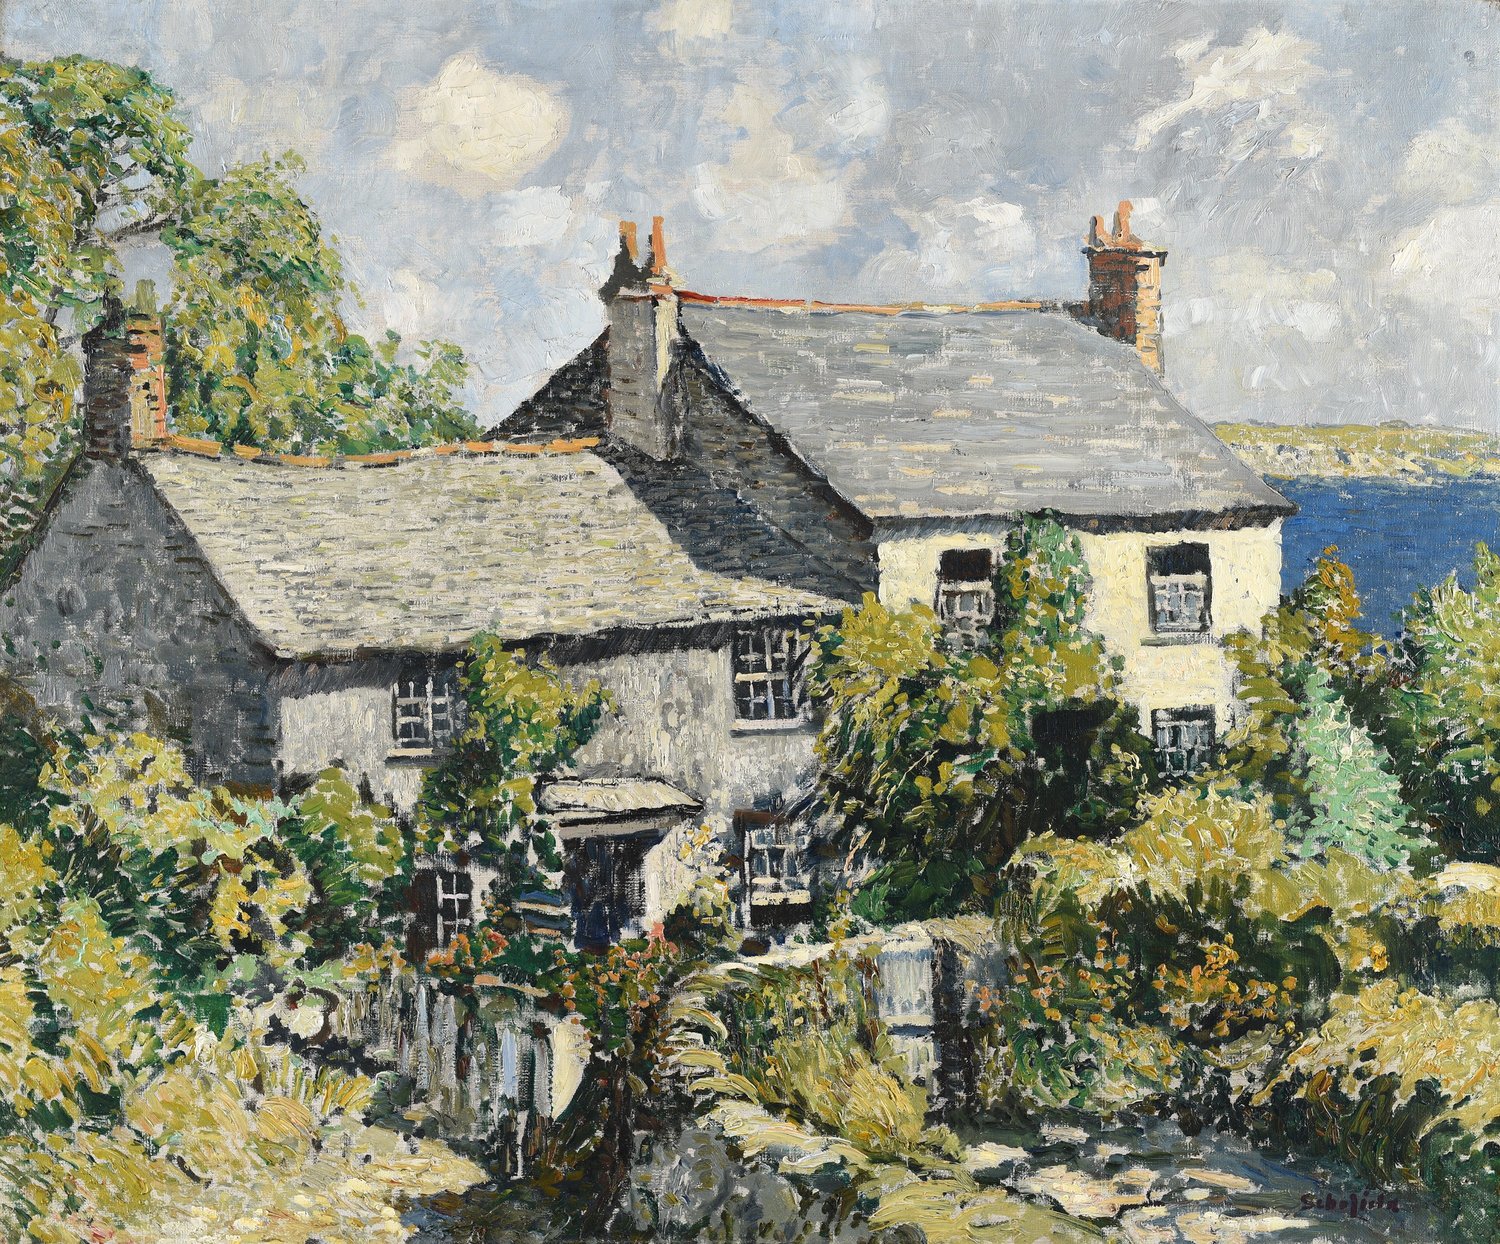 “Cornish Cottage,” by W. Elmer Schofield